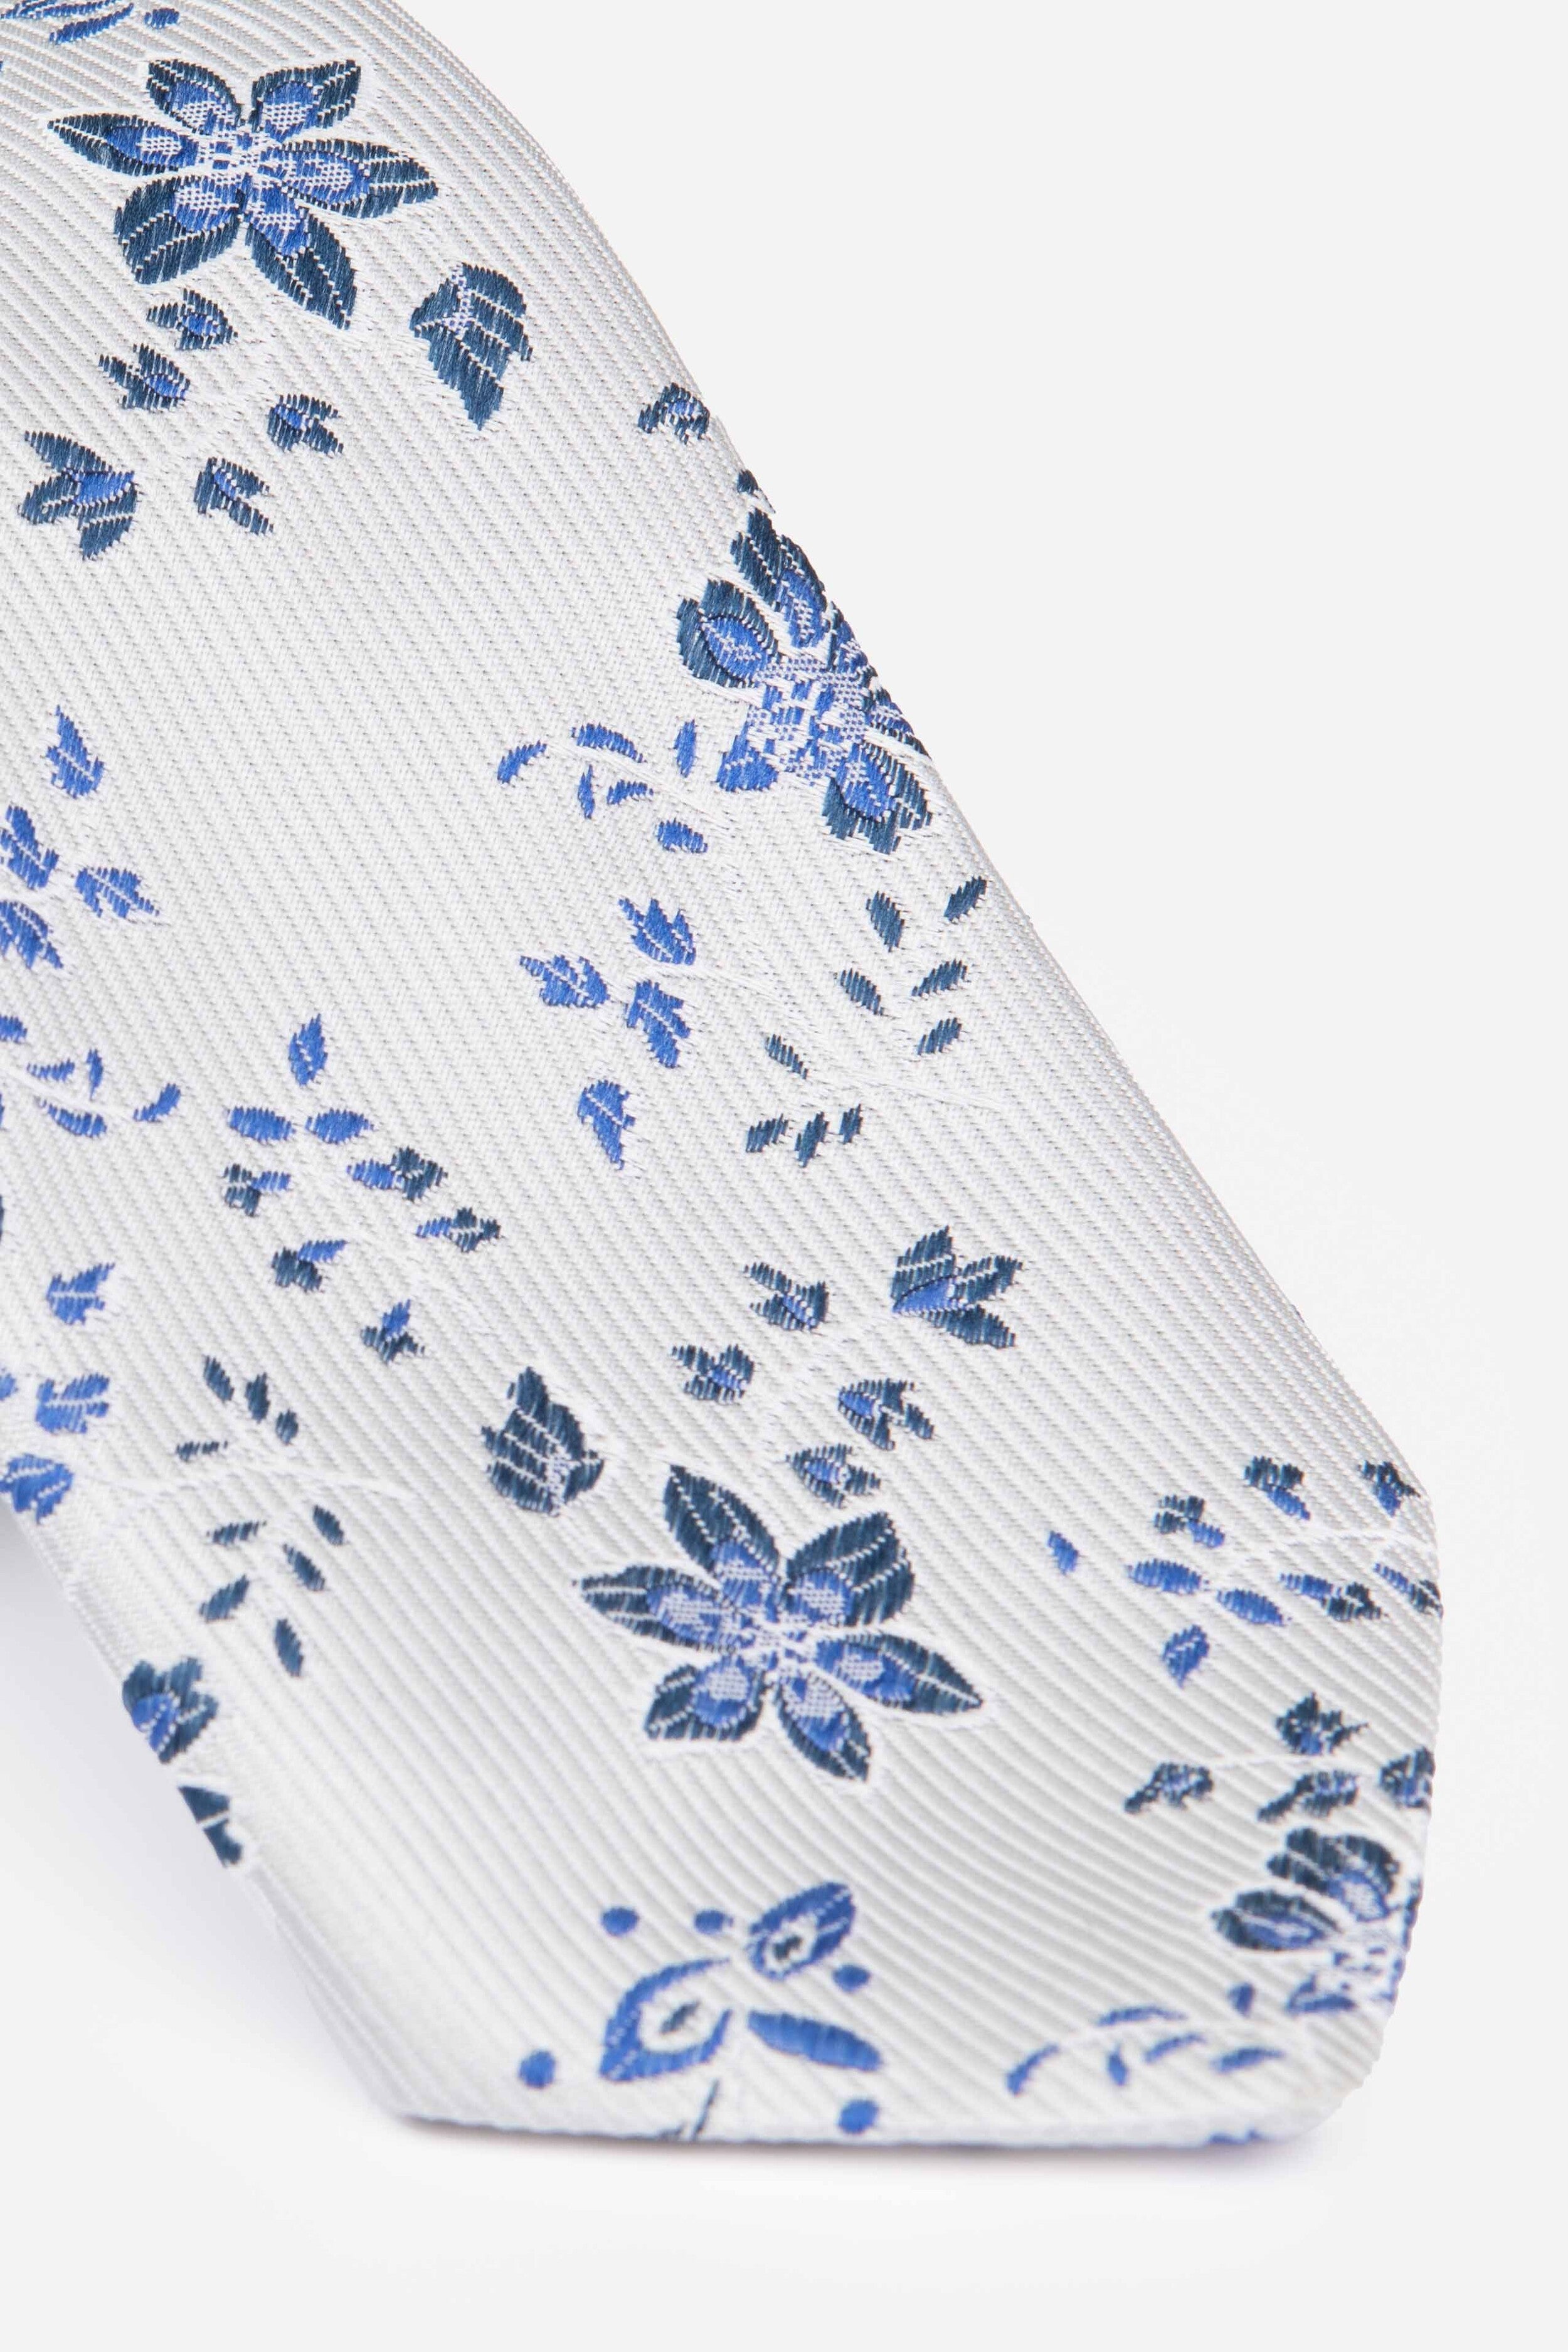 Floral tie - Grey-Blue pattern